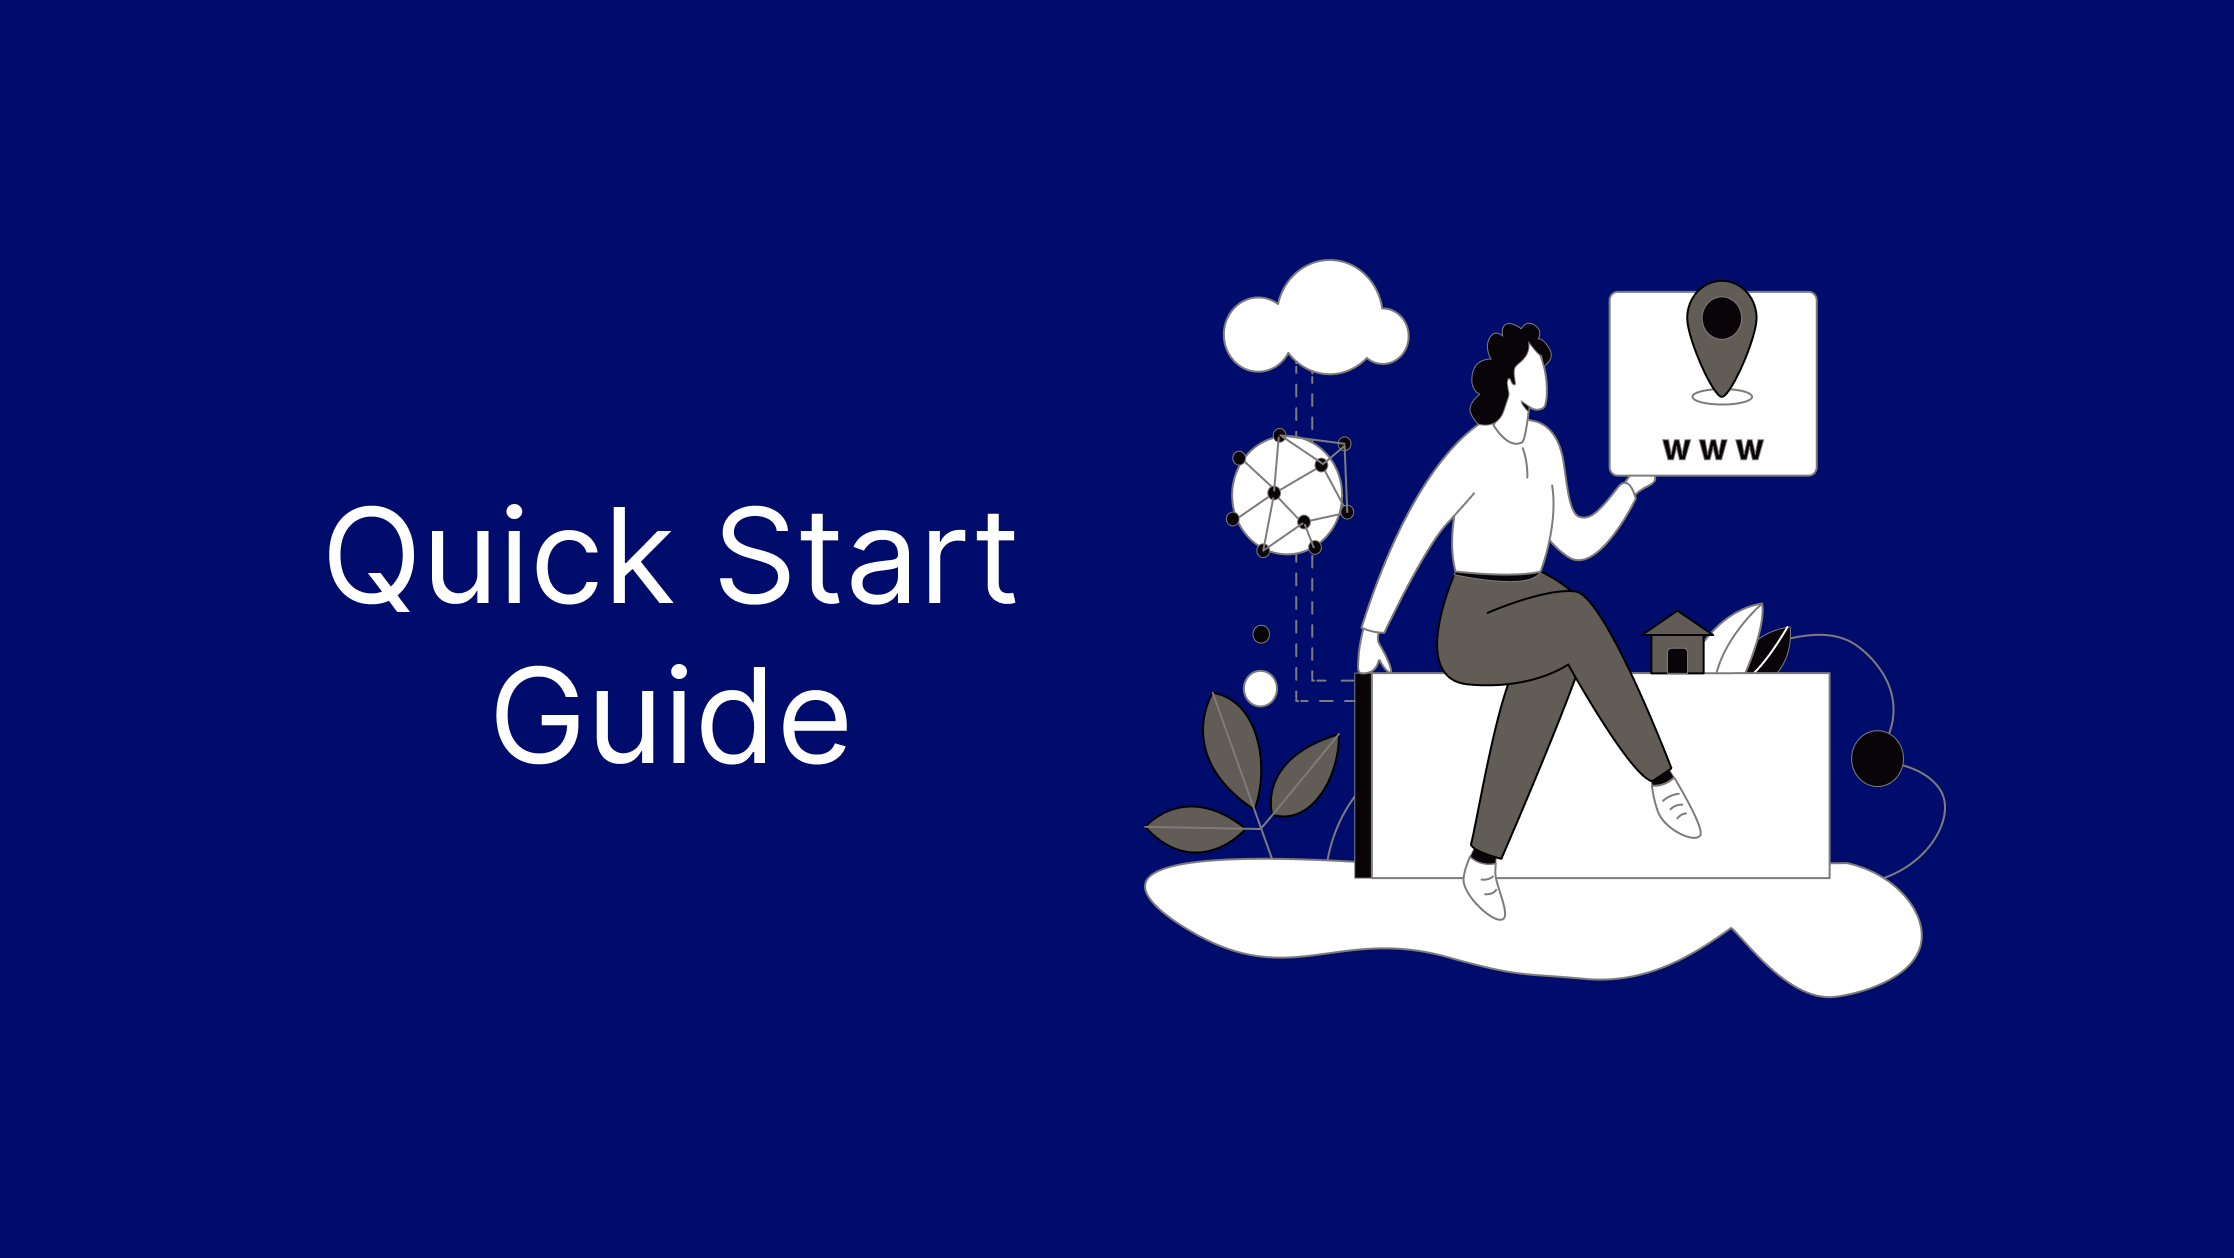 Quick Start Guide: Get Up & Running Fast